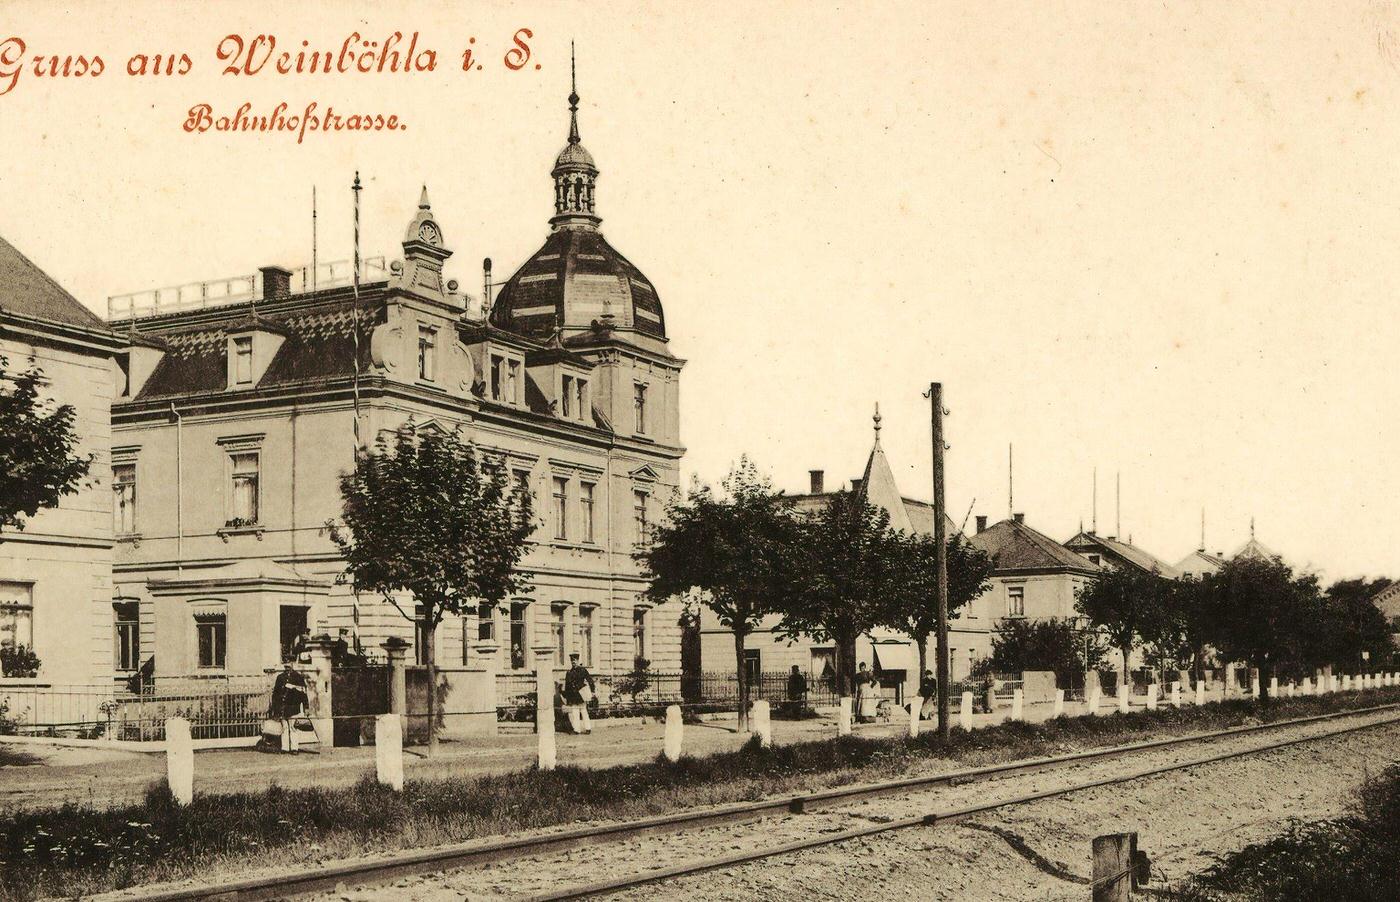 Bahnhof Weinbohla, Buildings in Landkreis Meissen, 1898.